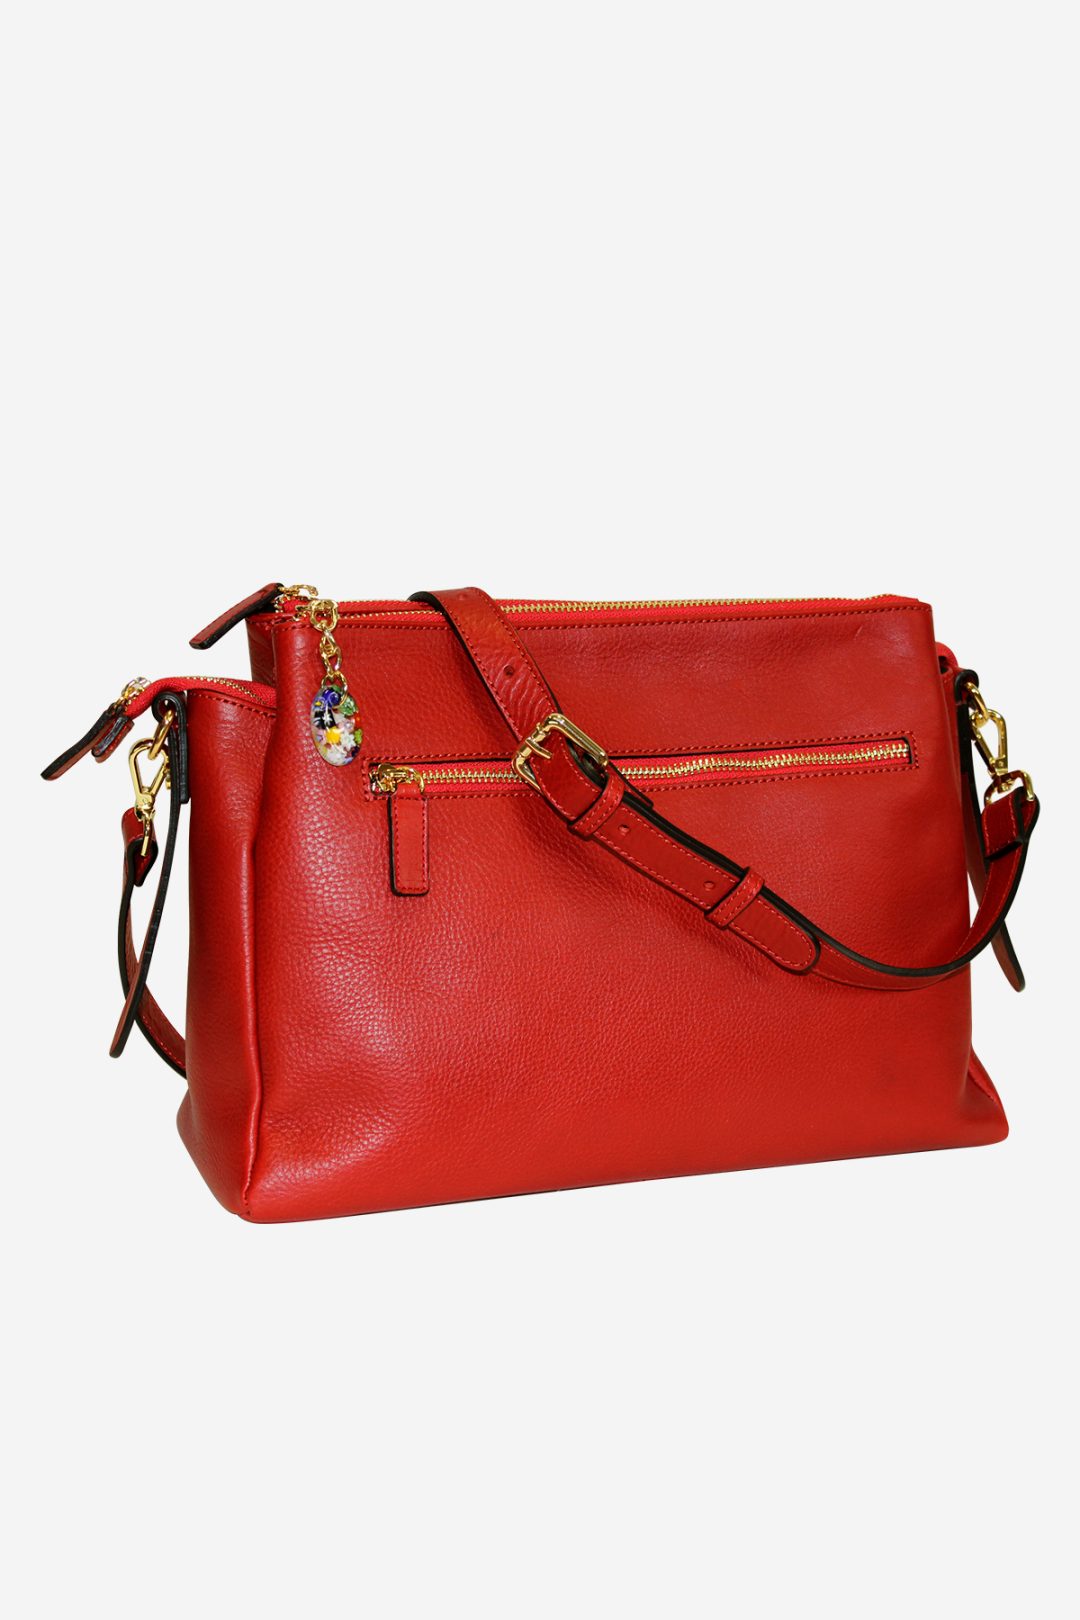 Buy Tan Handcrafted Genuine Leather Sling Bag Online at Jaypore.com